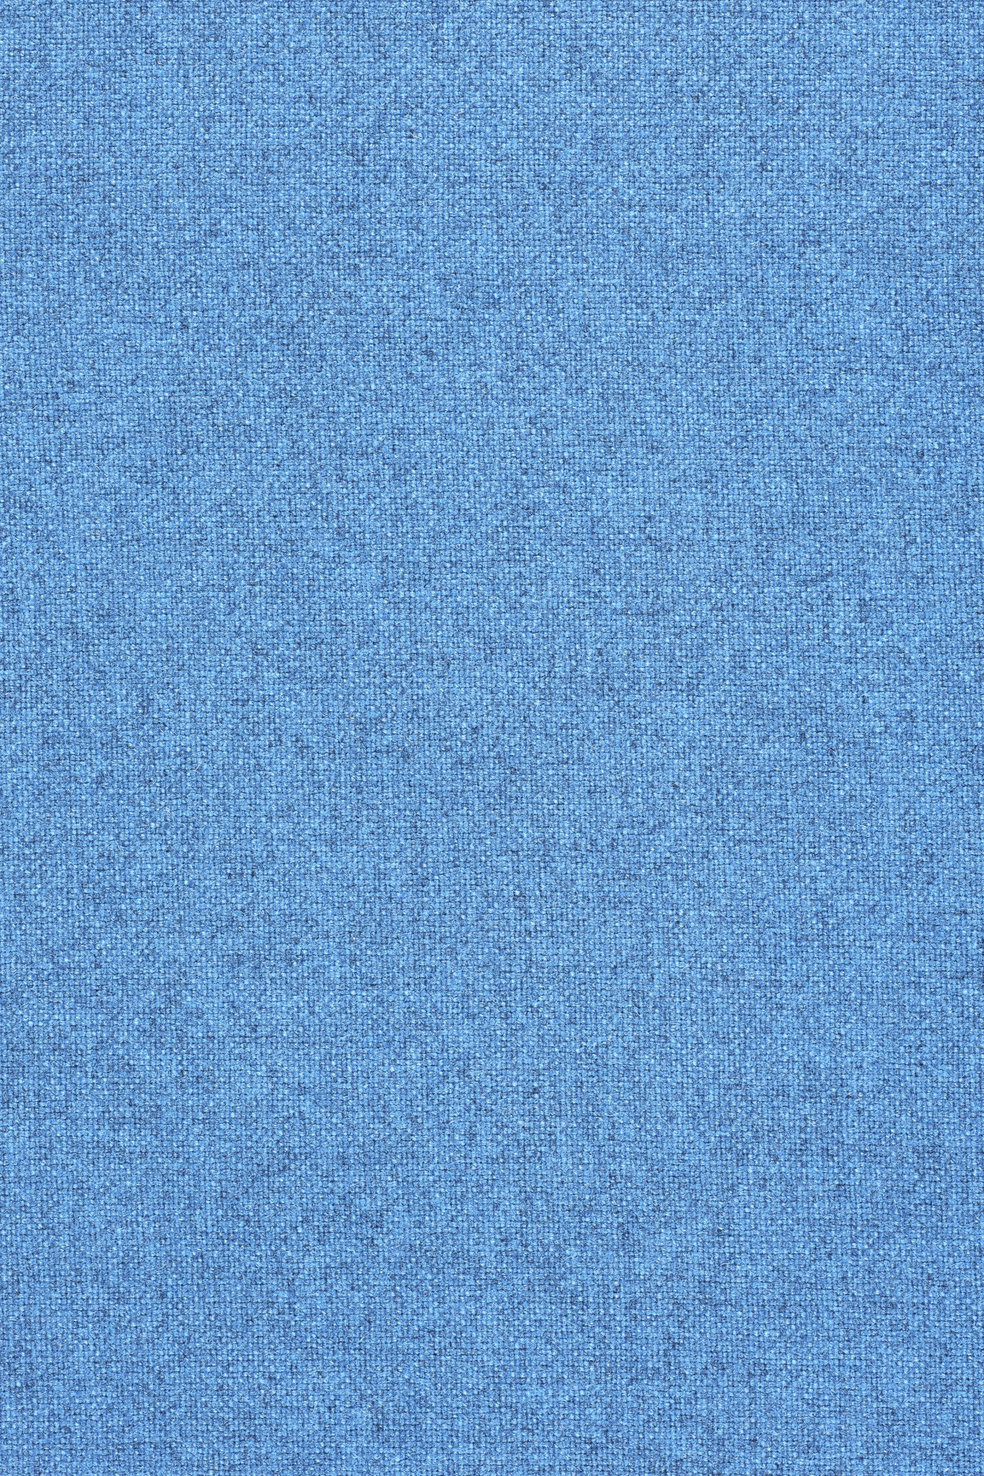 Fabric sample Tonica 2 743 blue